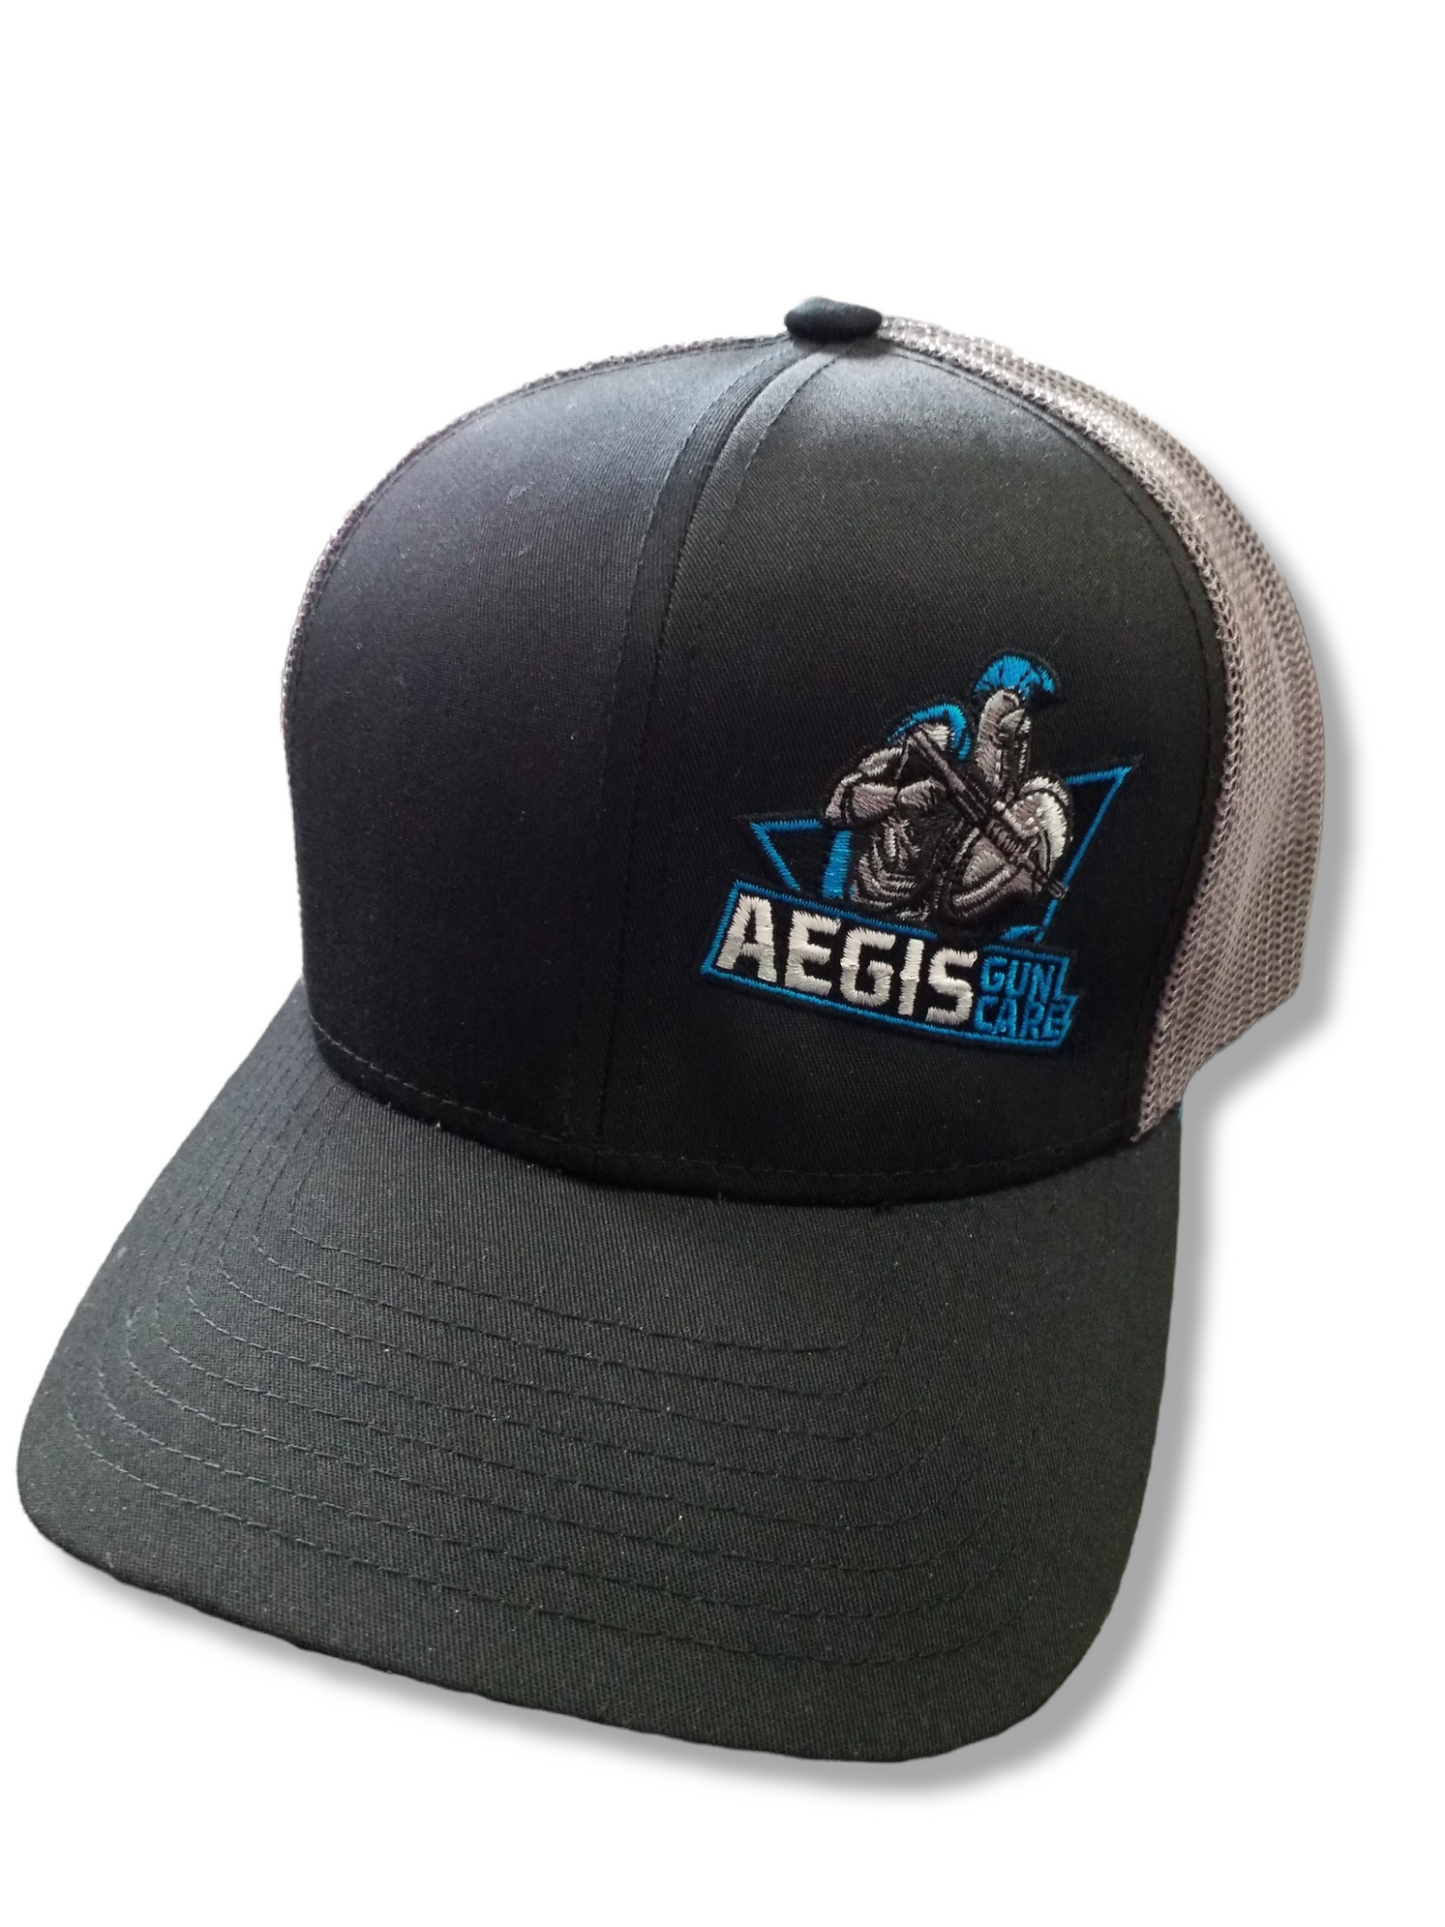 Aegis Logo trucker hat